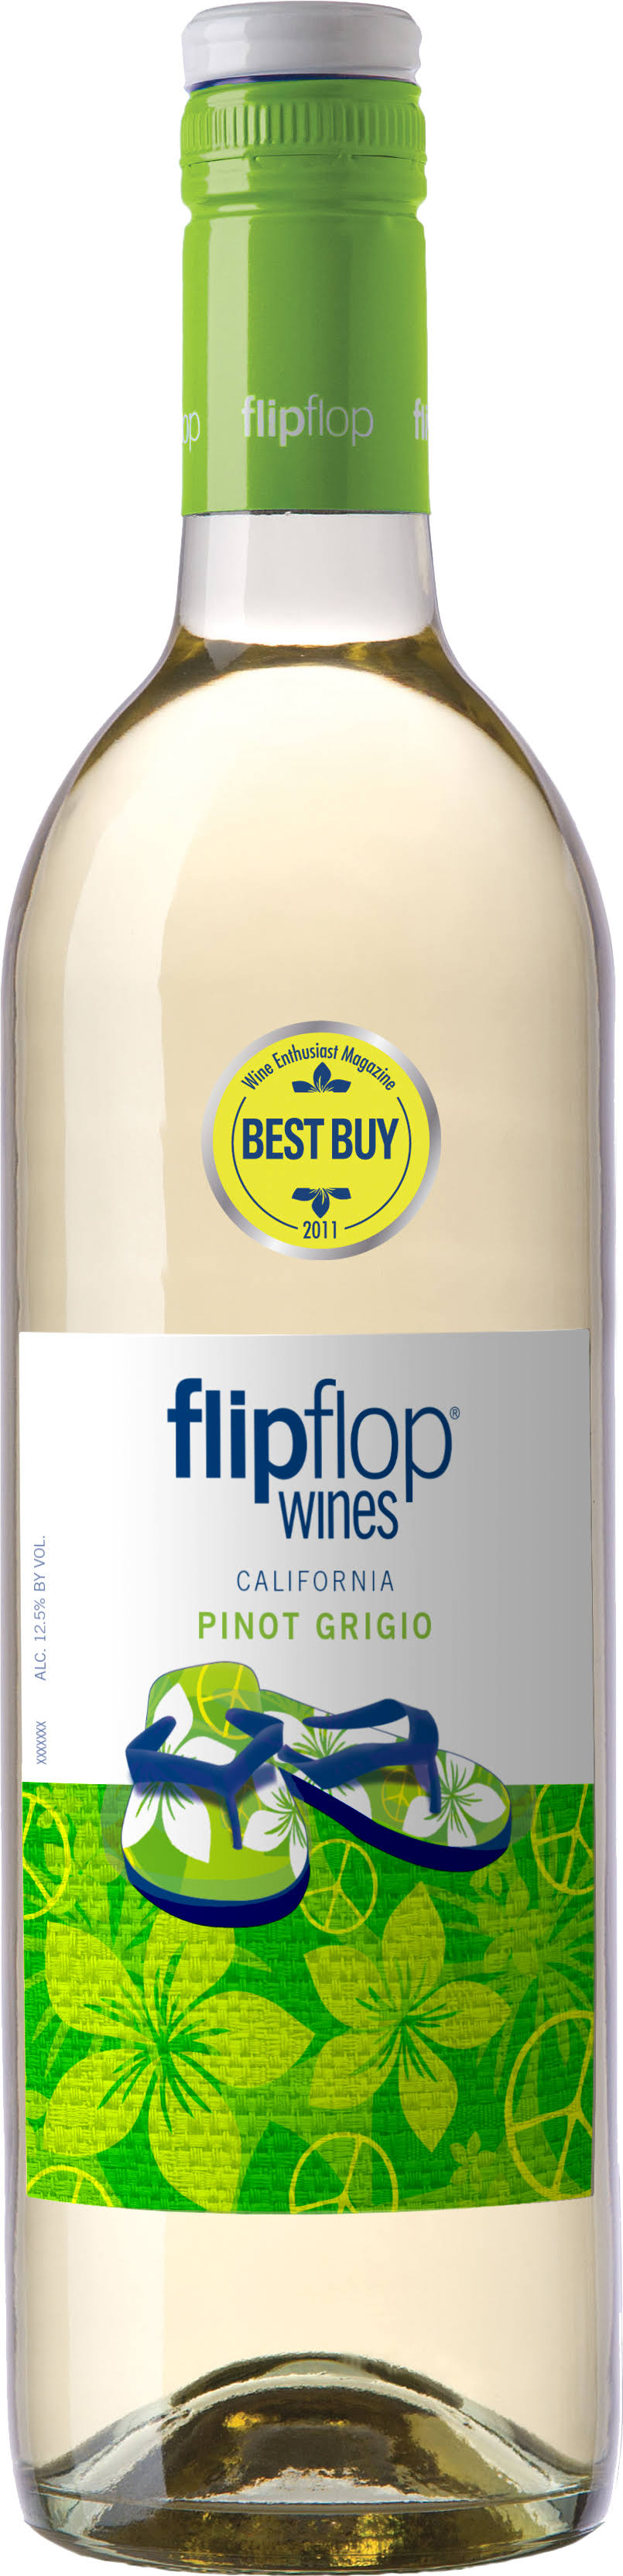 FlipFlop Pinot Grigio, California, 2010 - 750 ml